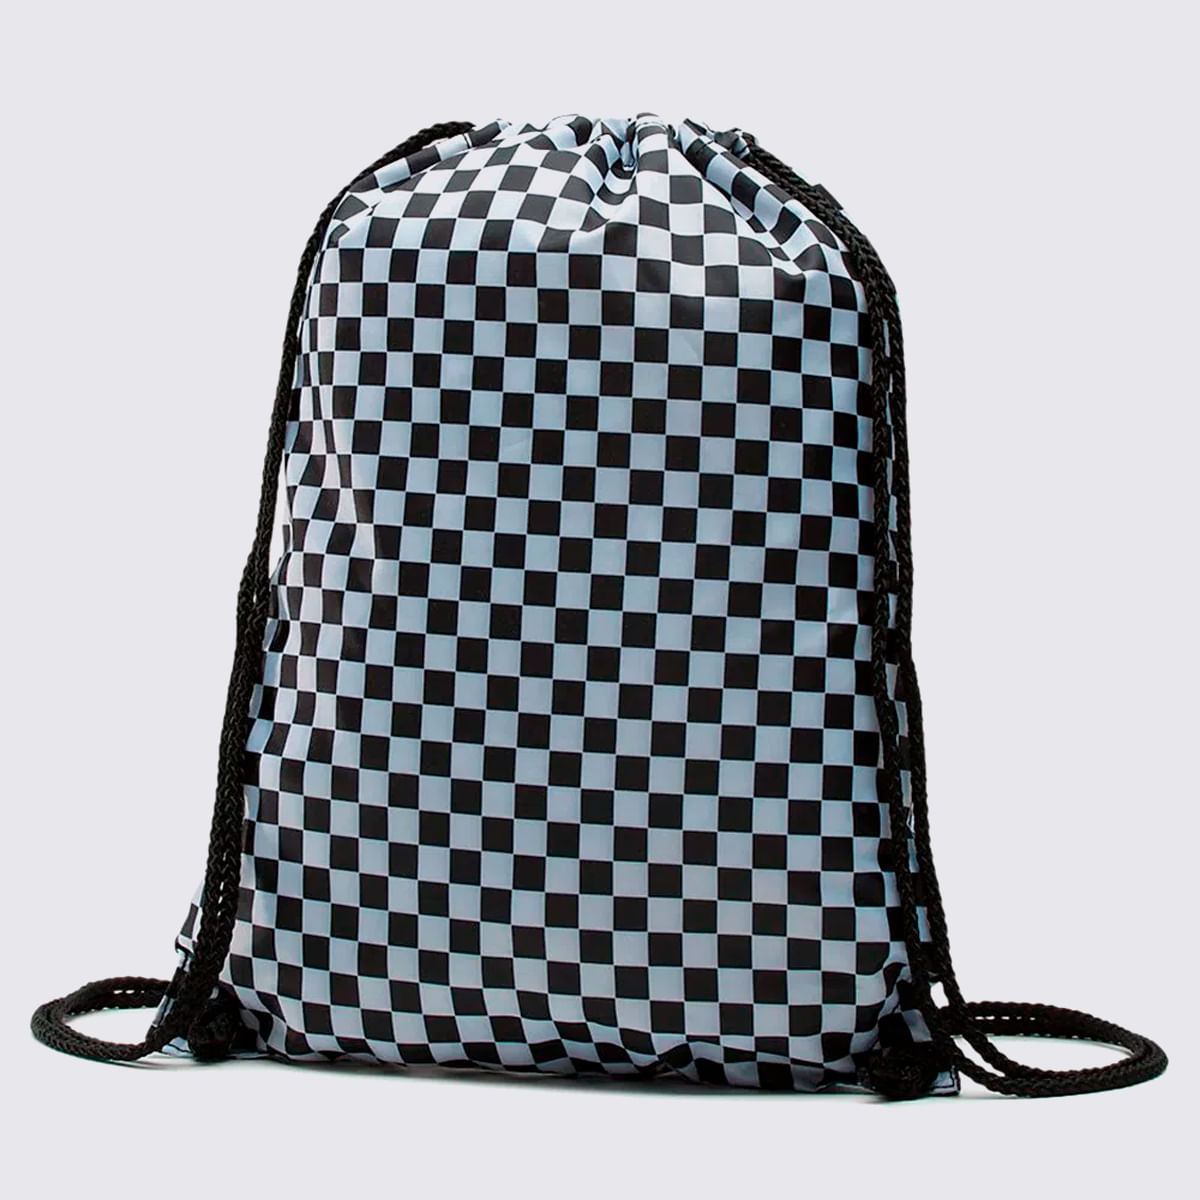 Mochila Vans Wm Benched Bag Black Shoes Checkerboard Menina - VN000SUF56M White